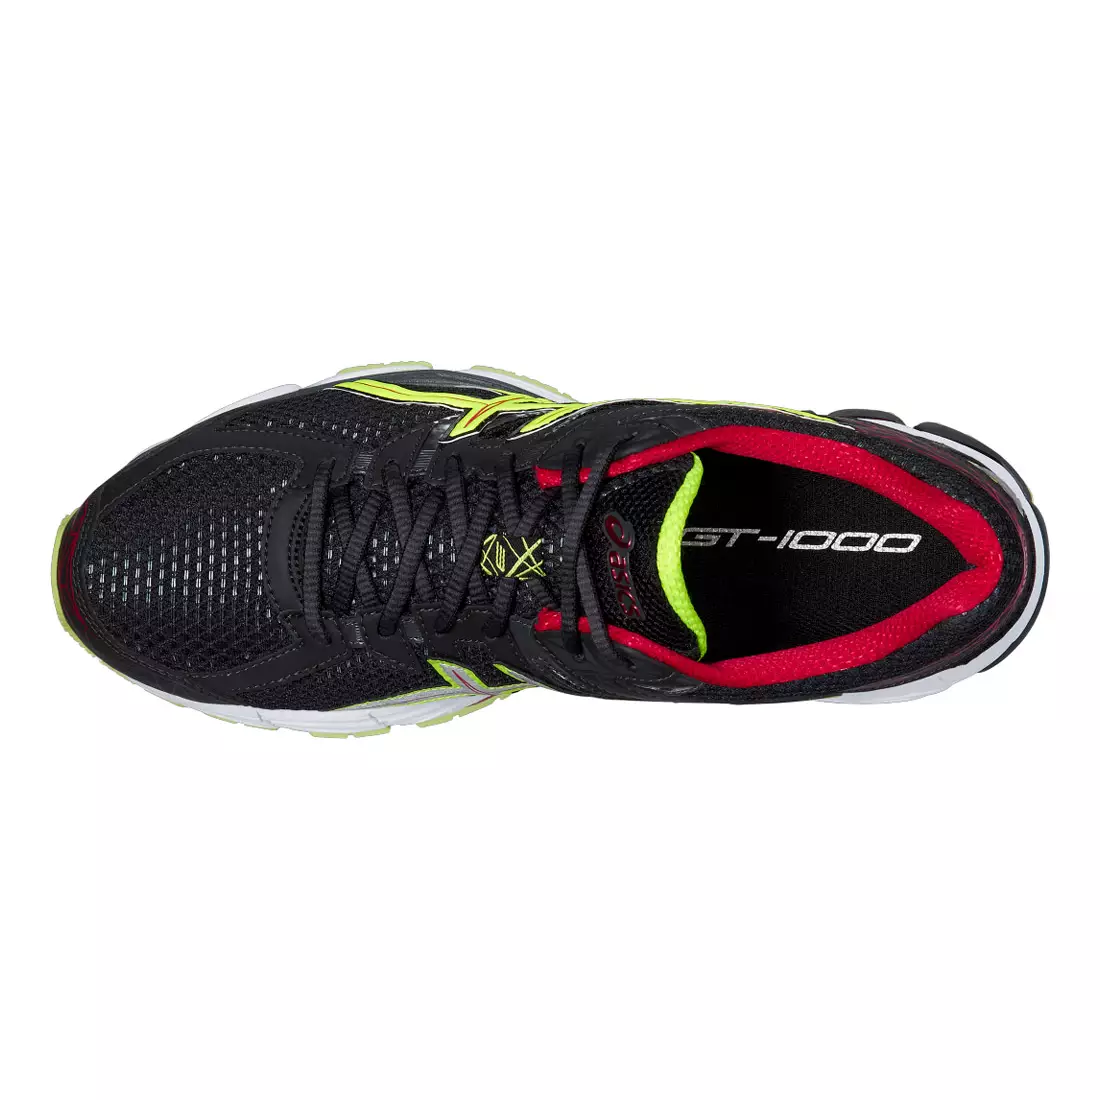 ASICS GT-1000 3 running shoes 9907